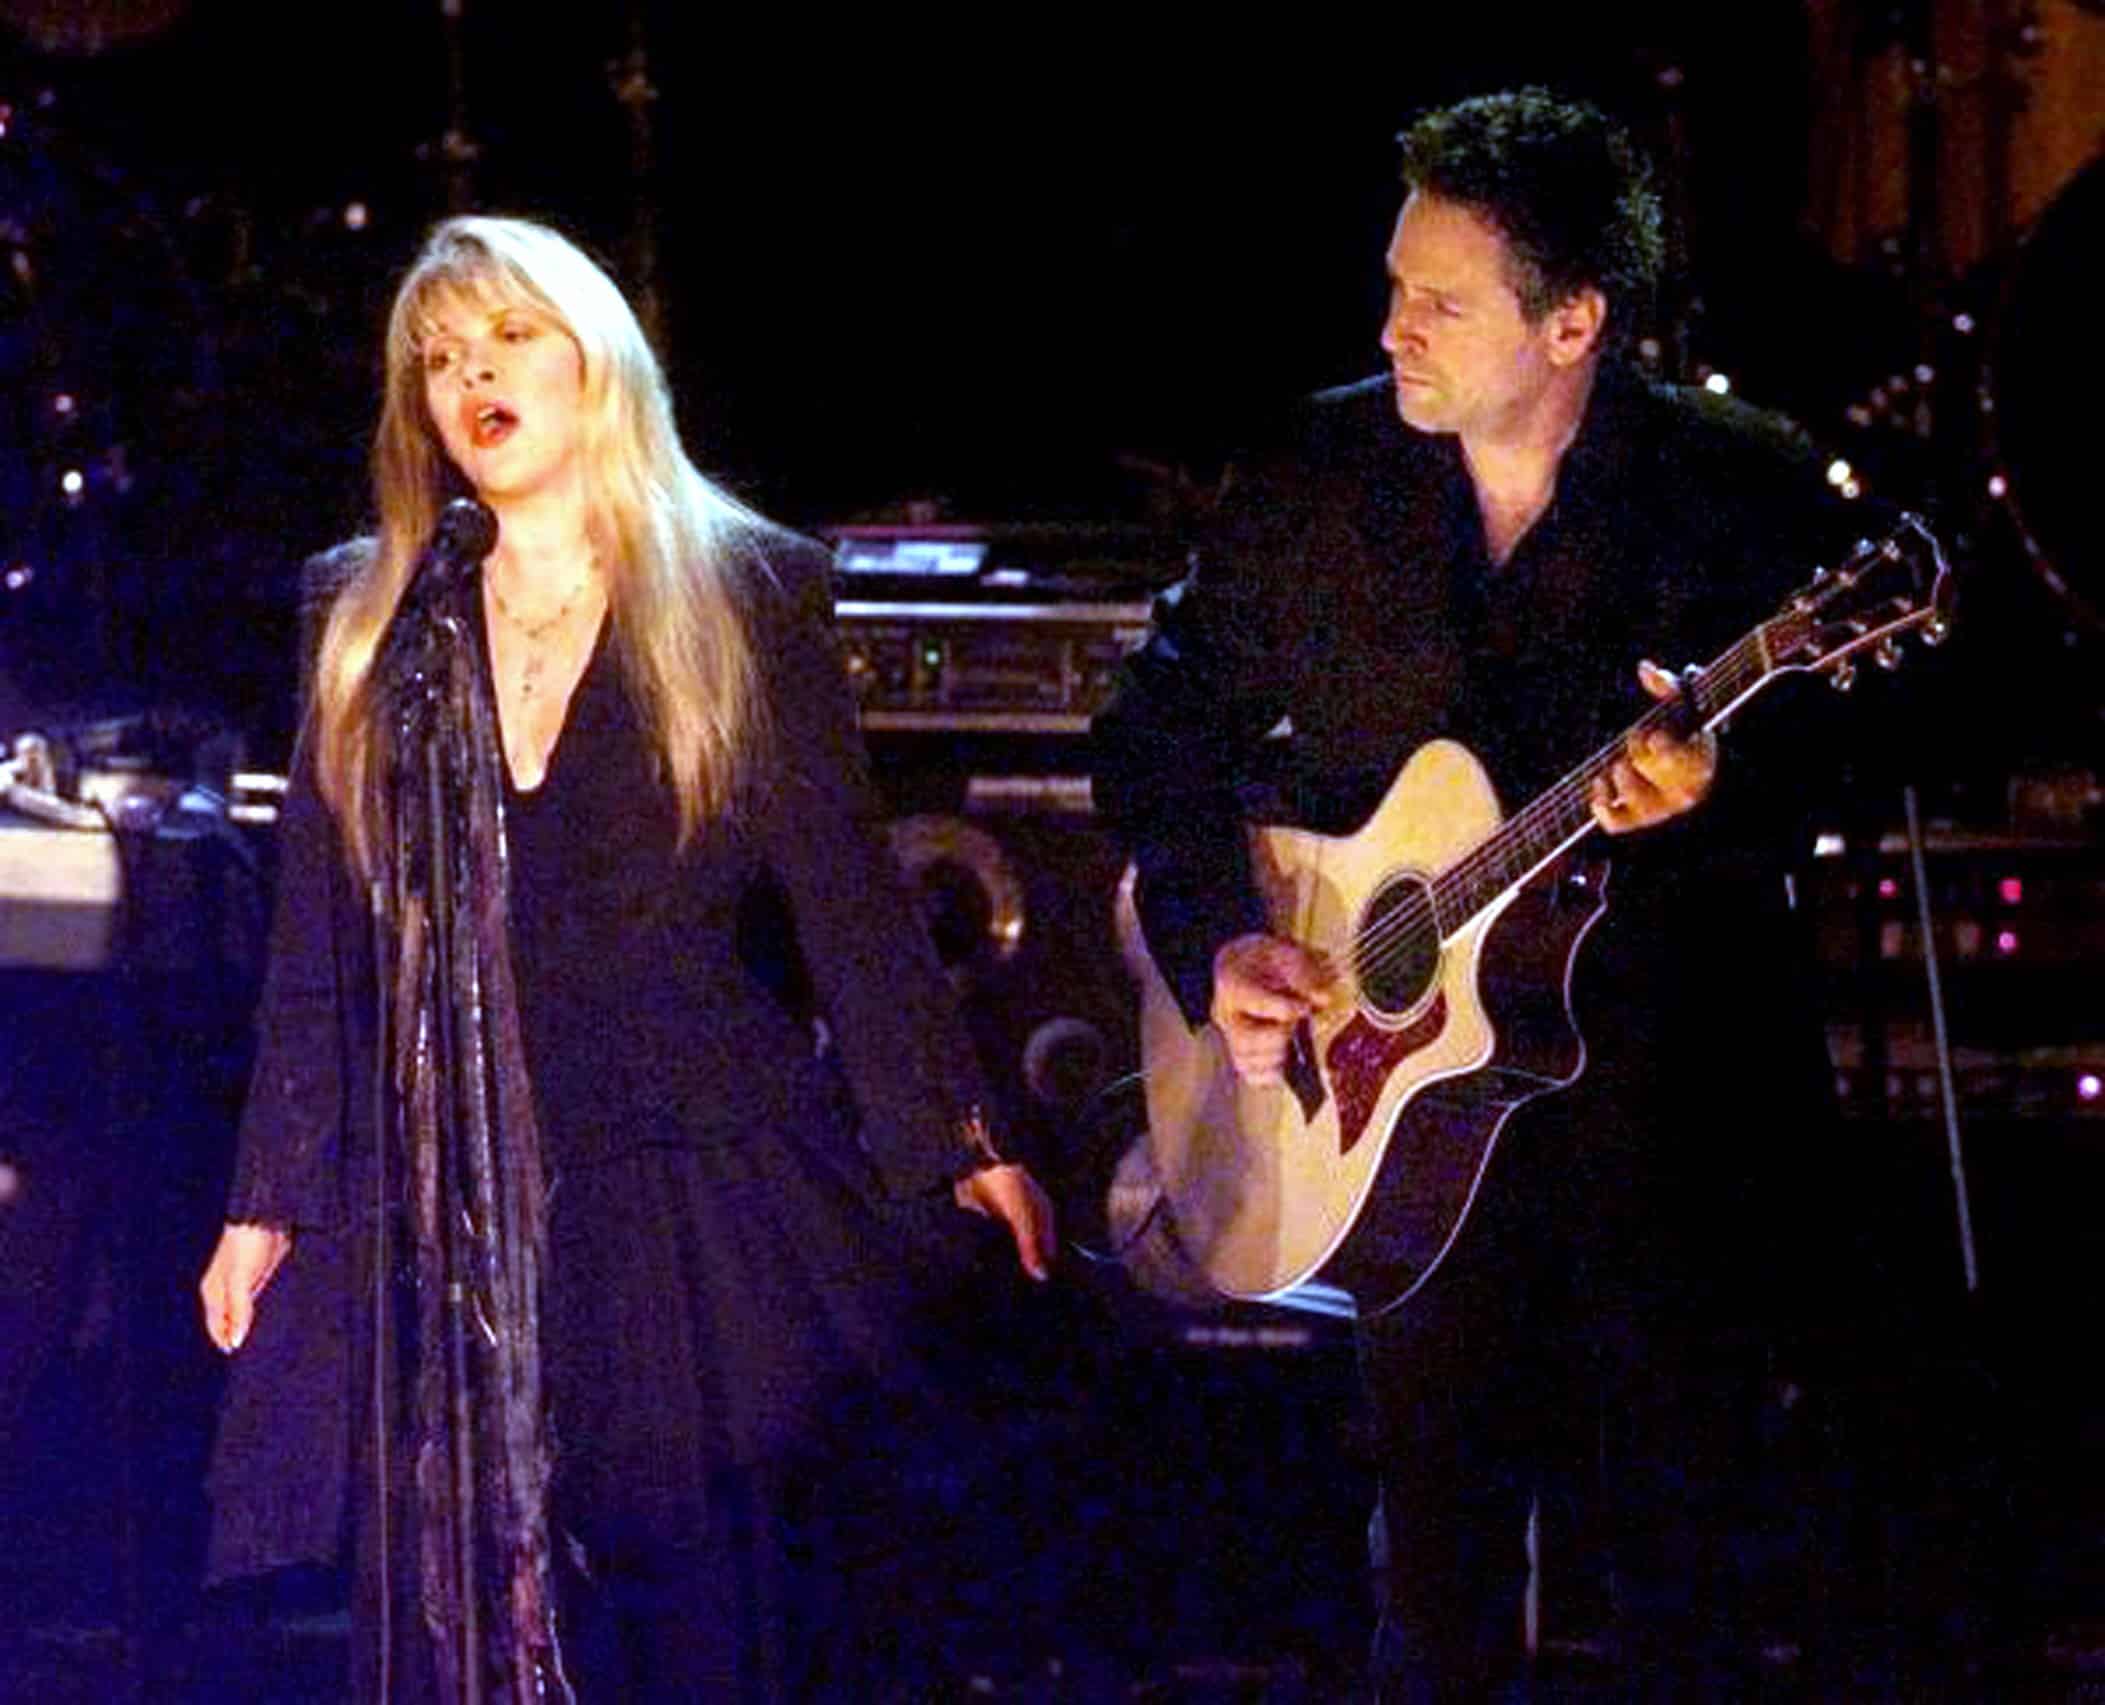 FLEETWOOD MAC, Stevie Nicks, Lindsey Buckingham, 2000's concert performance 